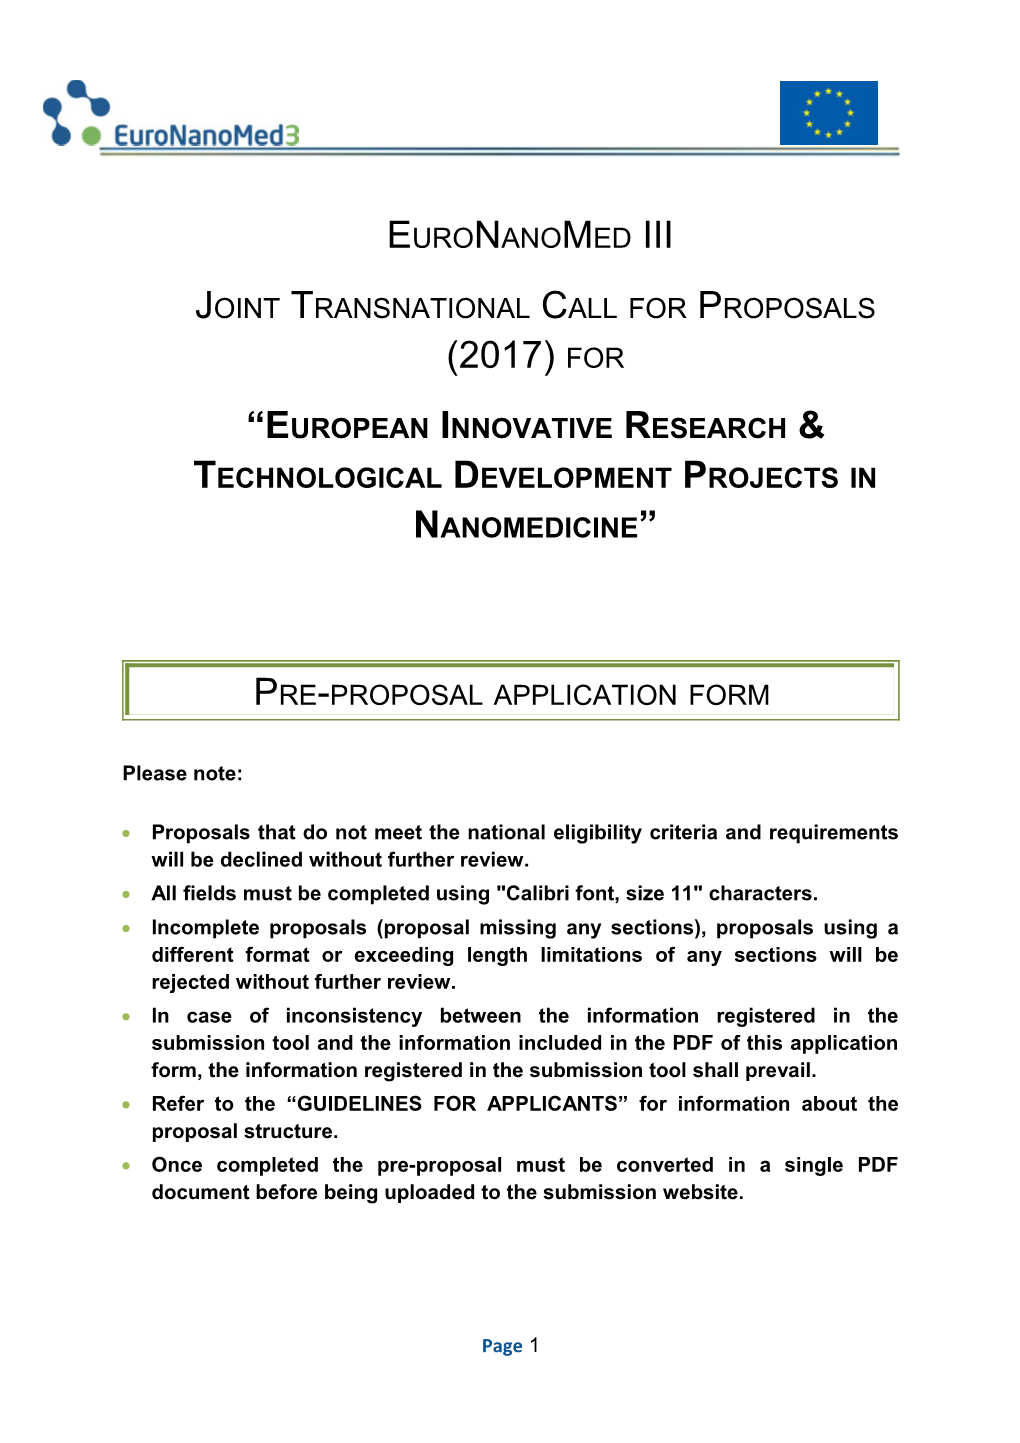 European Innovative Research & Technological Development Projects in Nanomedicine